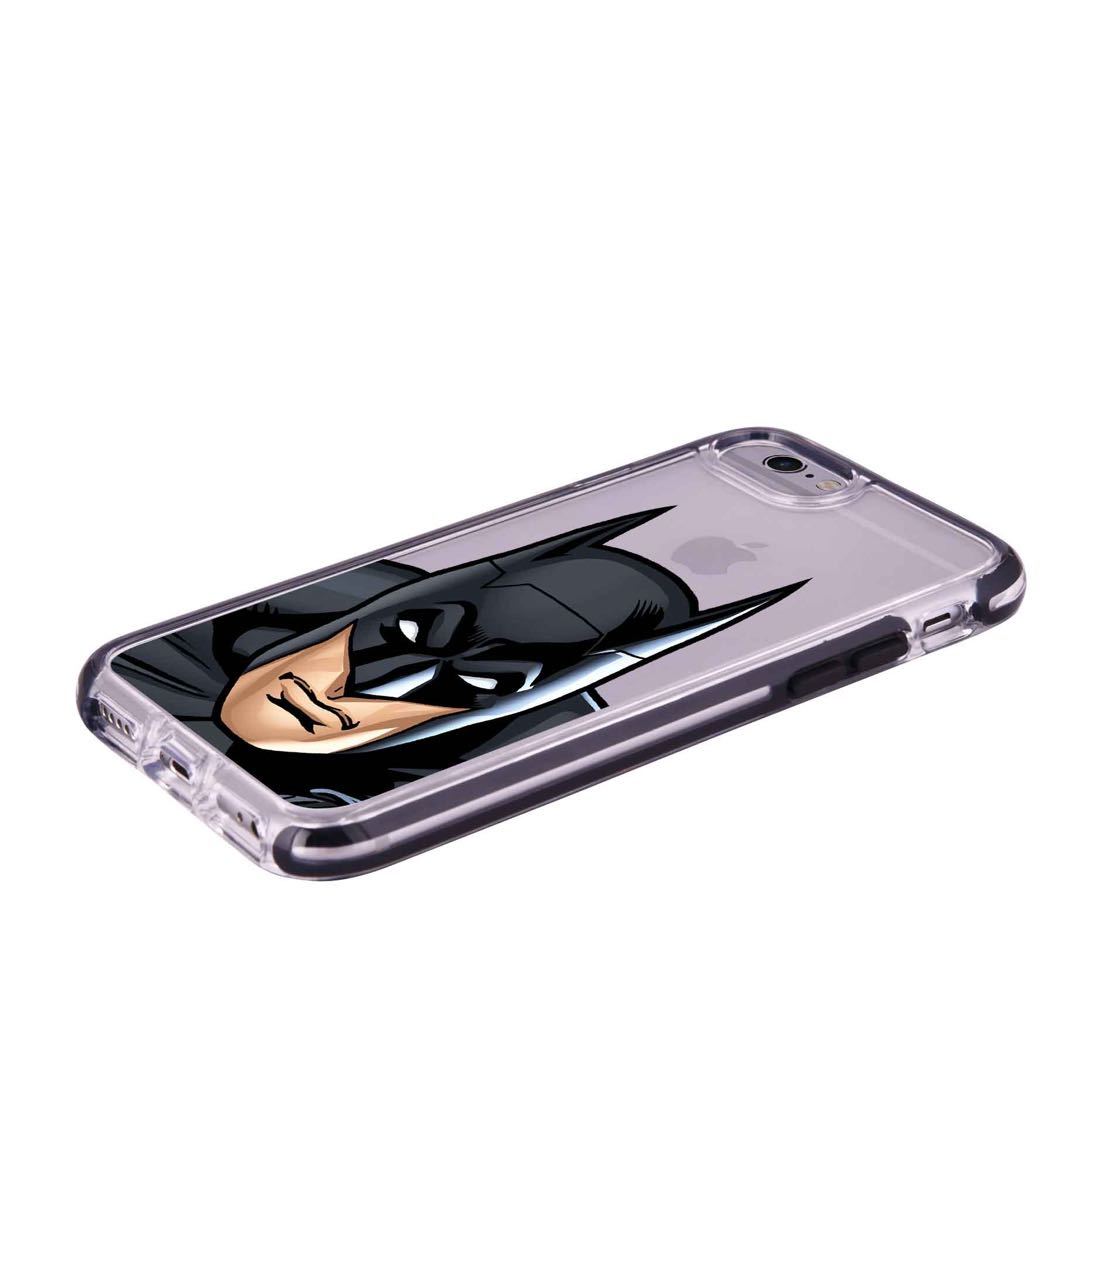 Fierce Batman - Extreme Phone Case for iPhone 6 Plus